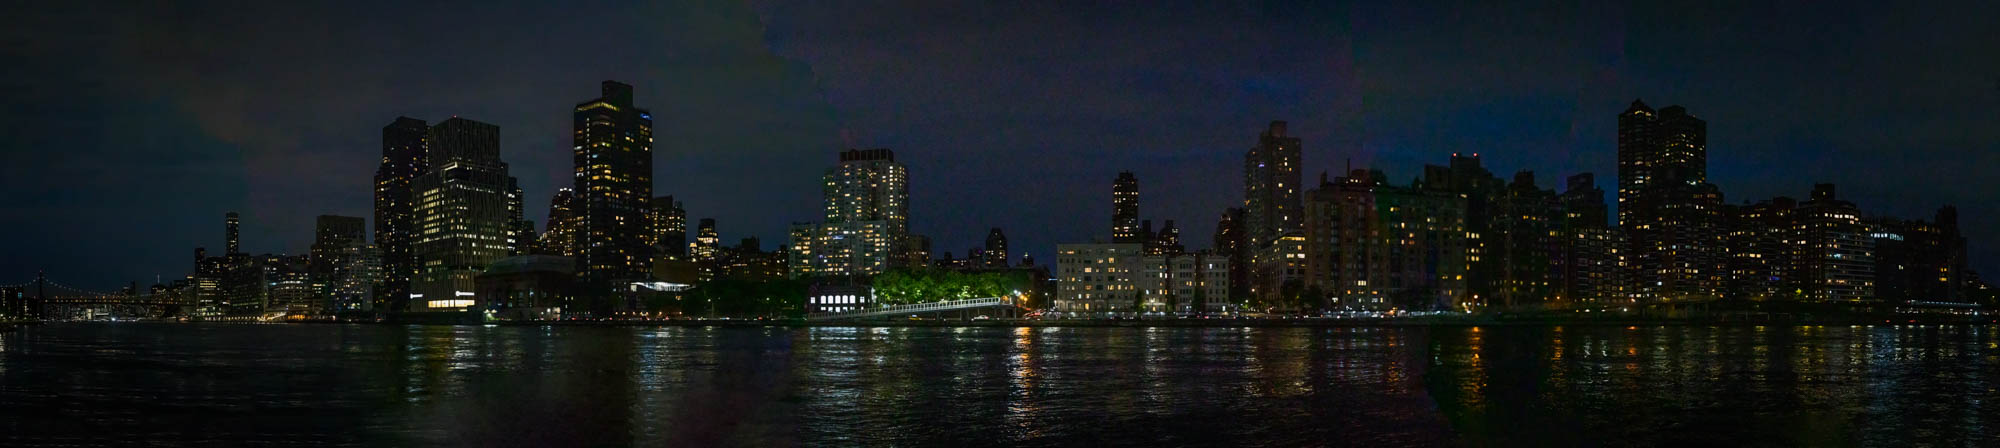 Panorama view of NYC skyline at night